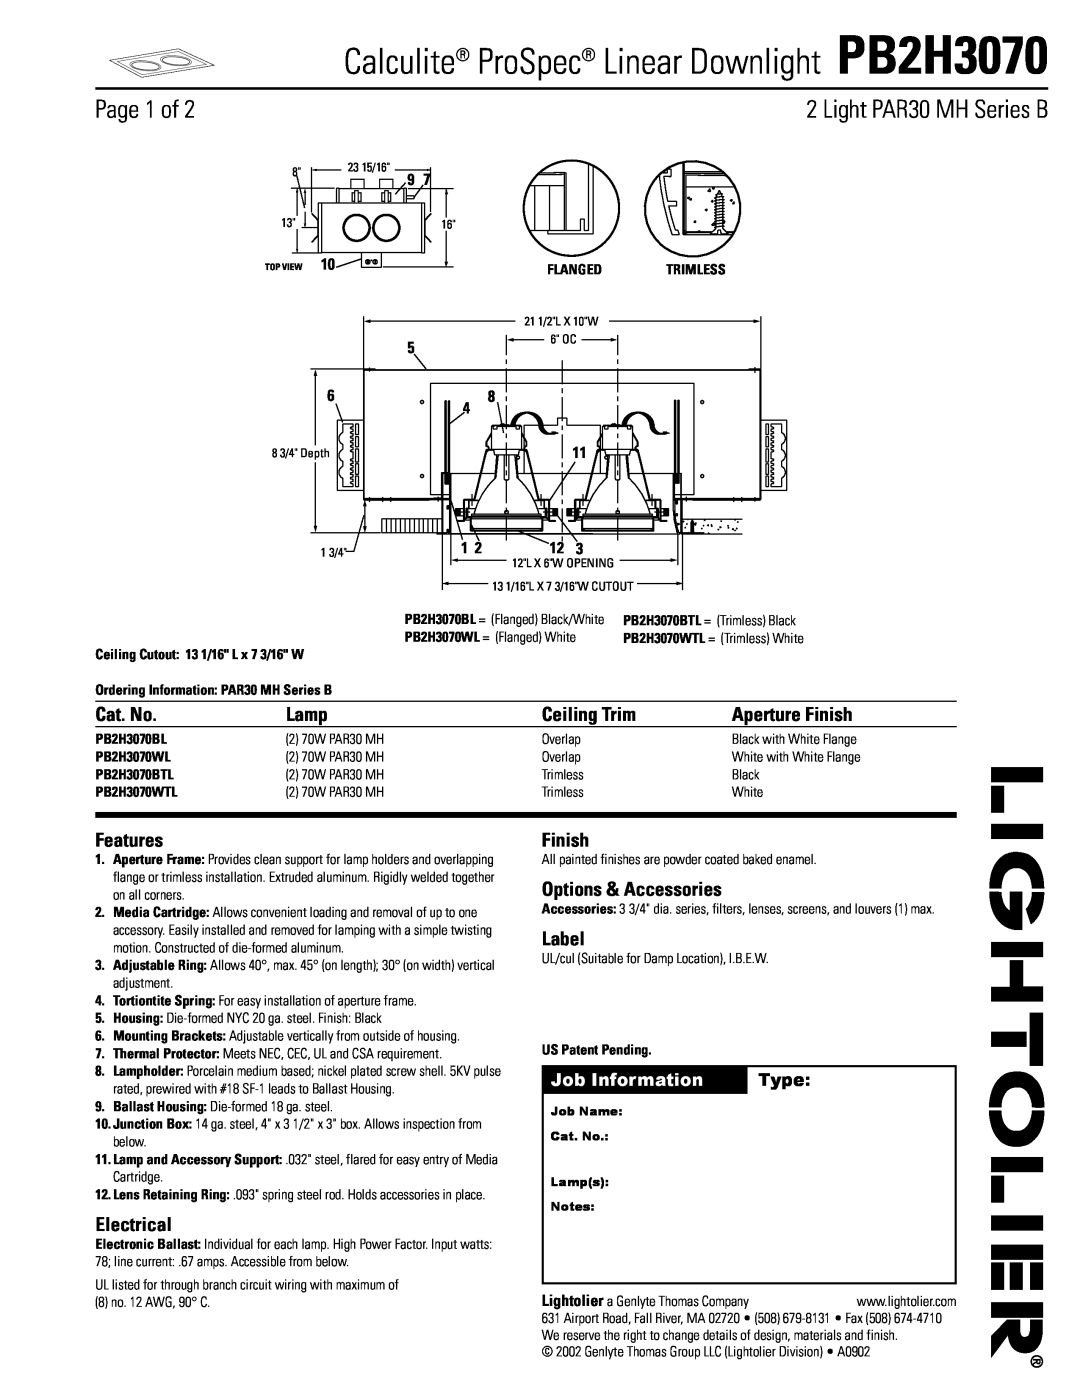 Lightolier PB2H3070 manual Page 1 of, Light PAR30 MH Series B, Cat. No, Lamp, Ceiling Trim, Aperture Finish, Features 